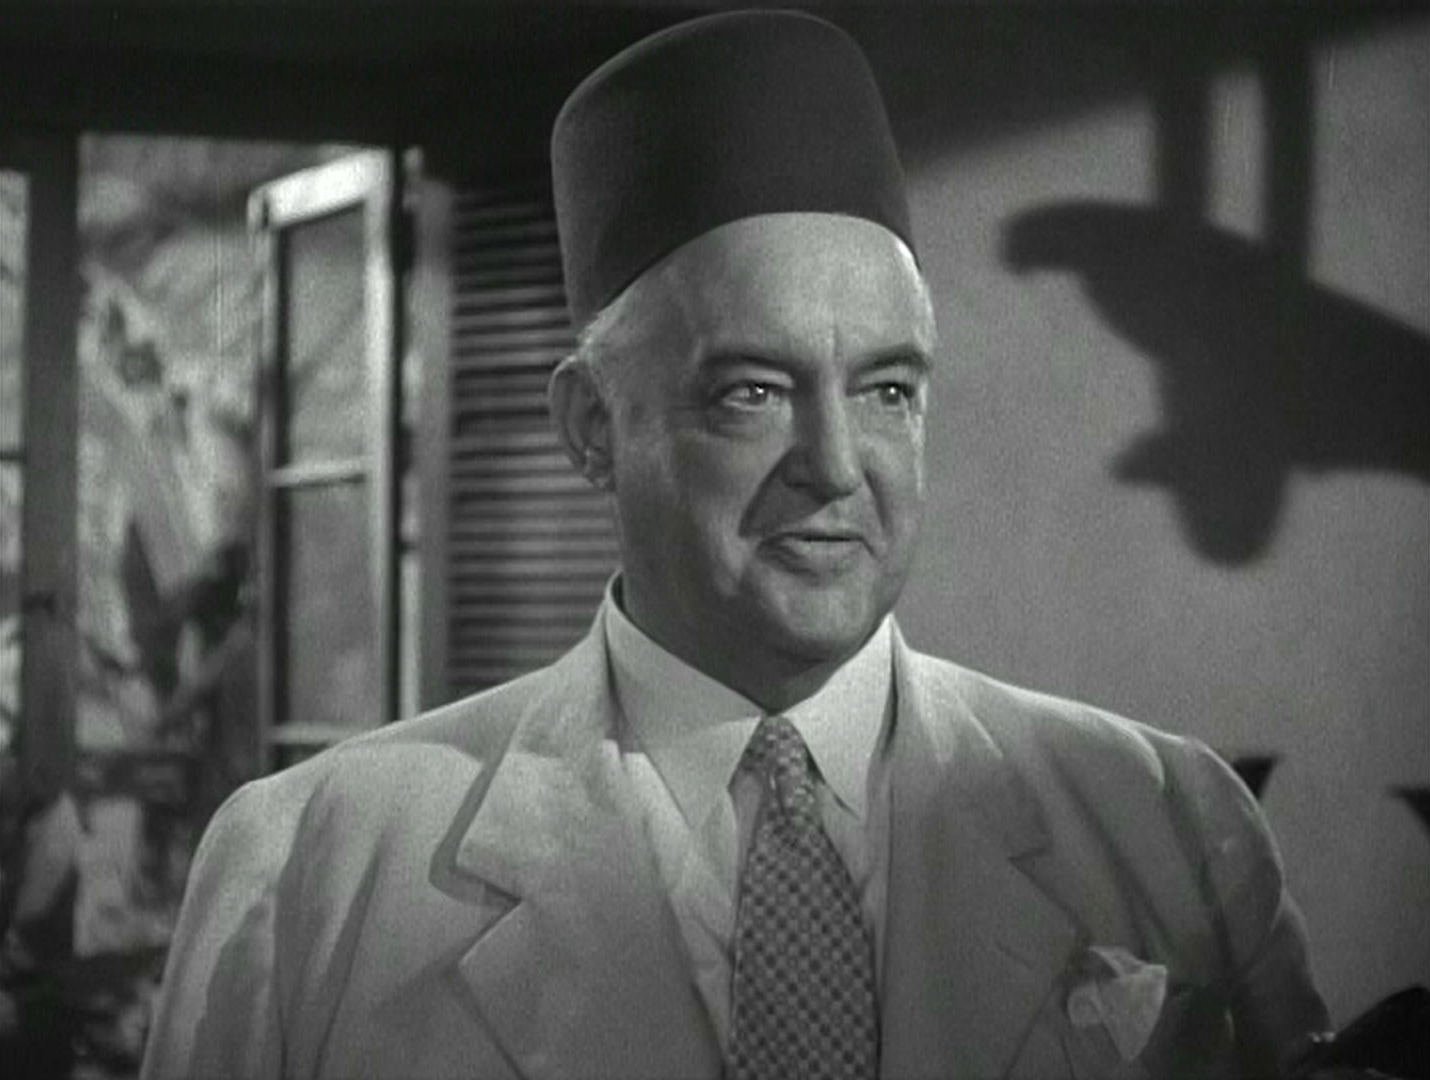 Casablanca - Michael Curtiz - Syndey Greenstreet - Signor Ferrari - fez - shadow of parrot